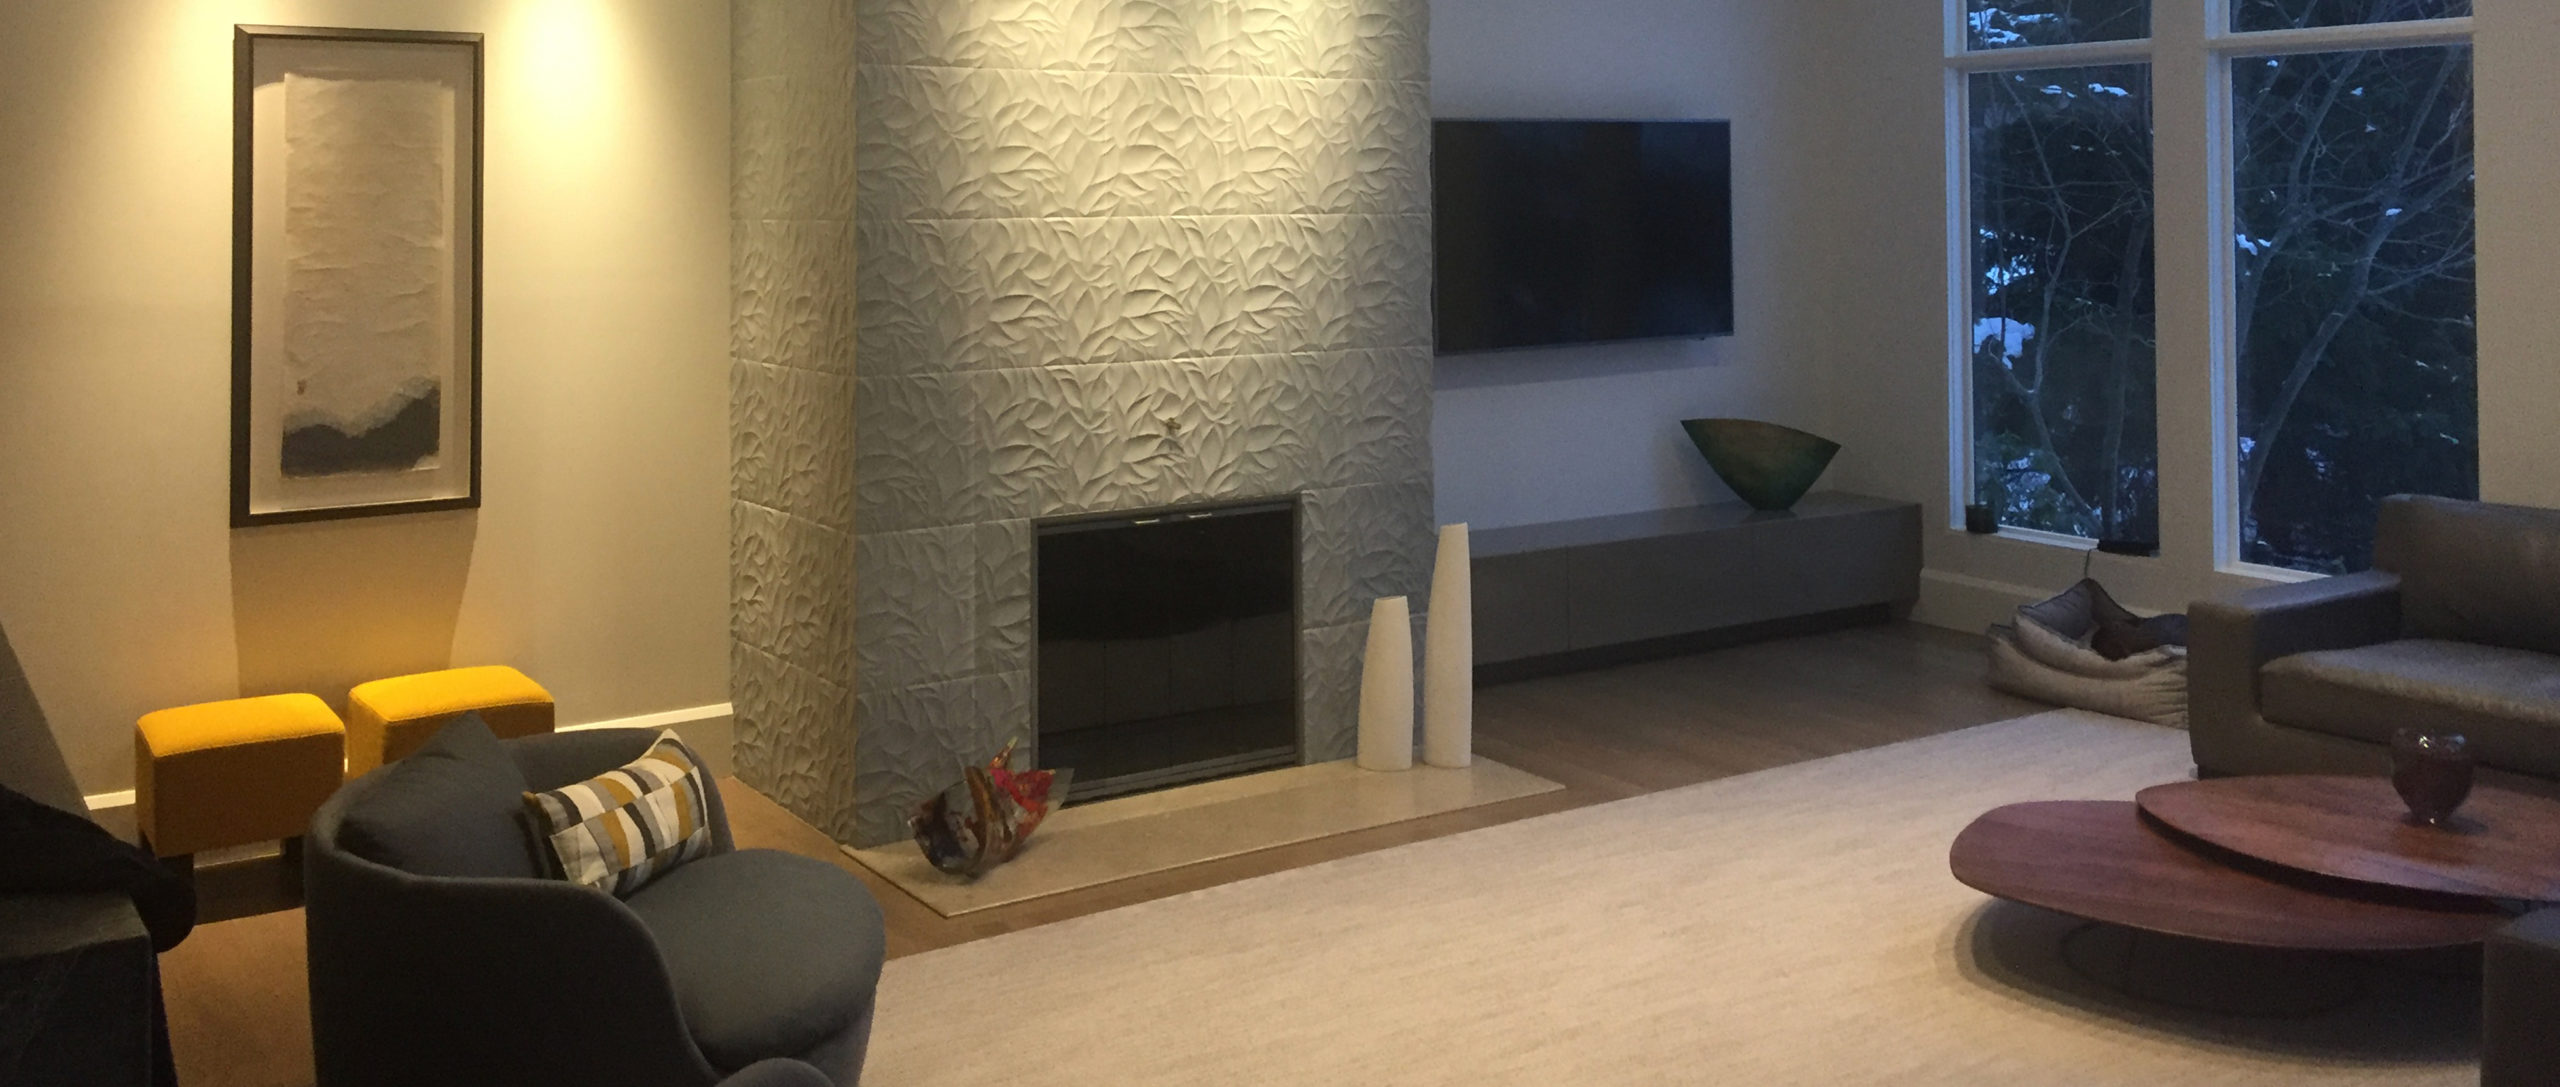 evergreen-portfolio-pepper-pike-modern-remodel-interior-LR-living-room-fireplace-BANNER